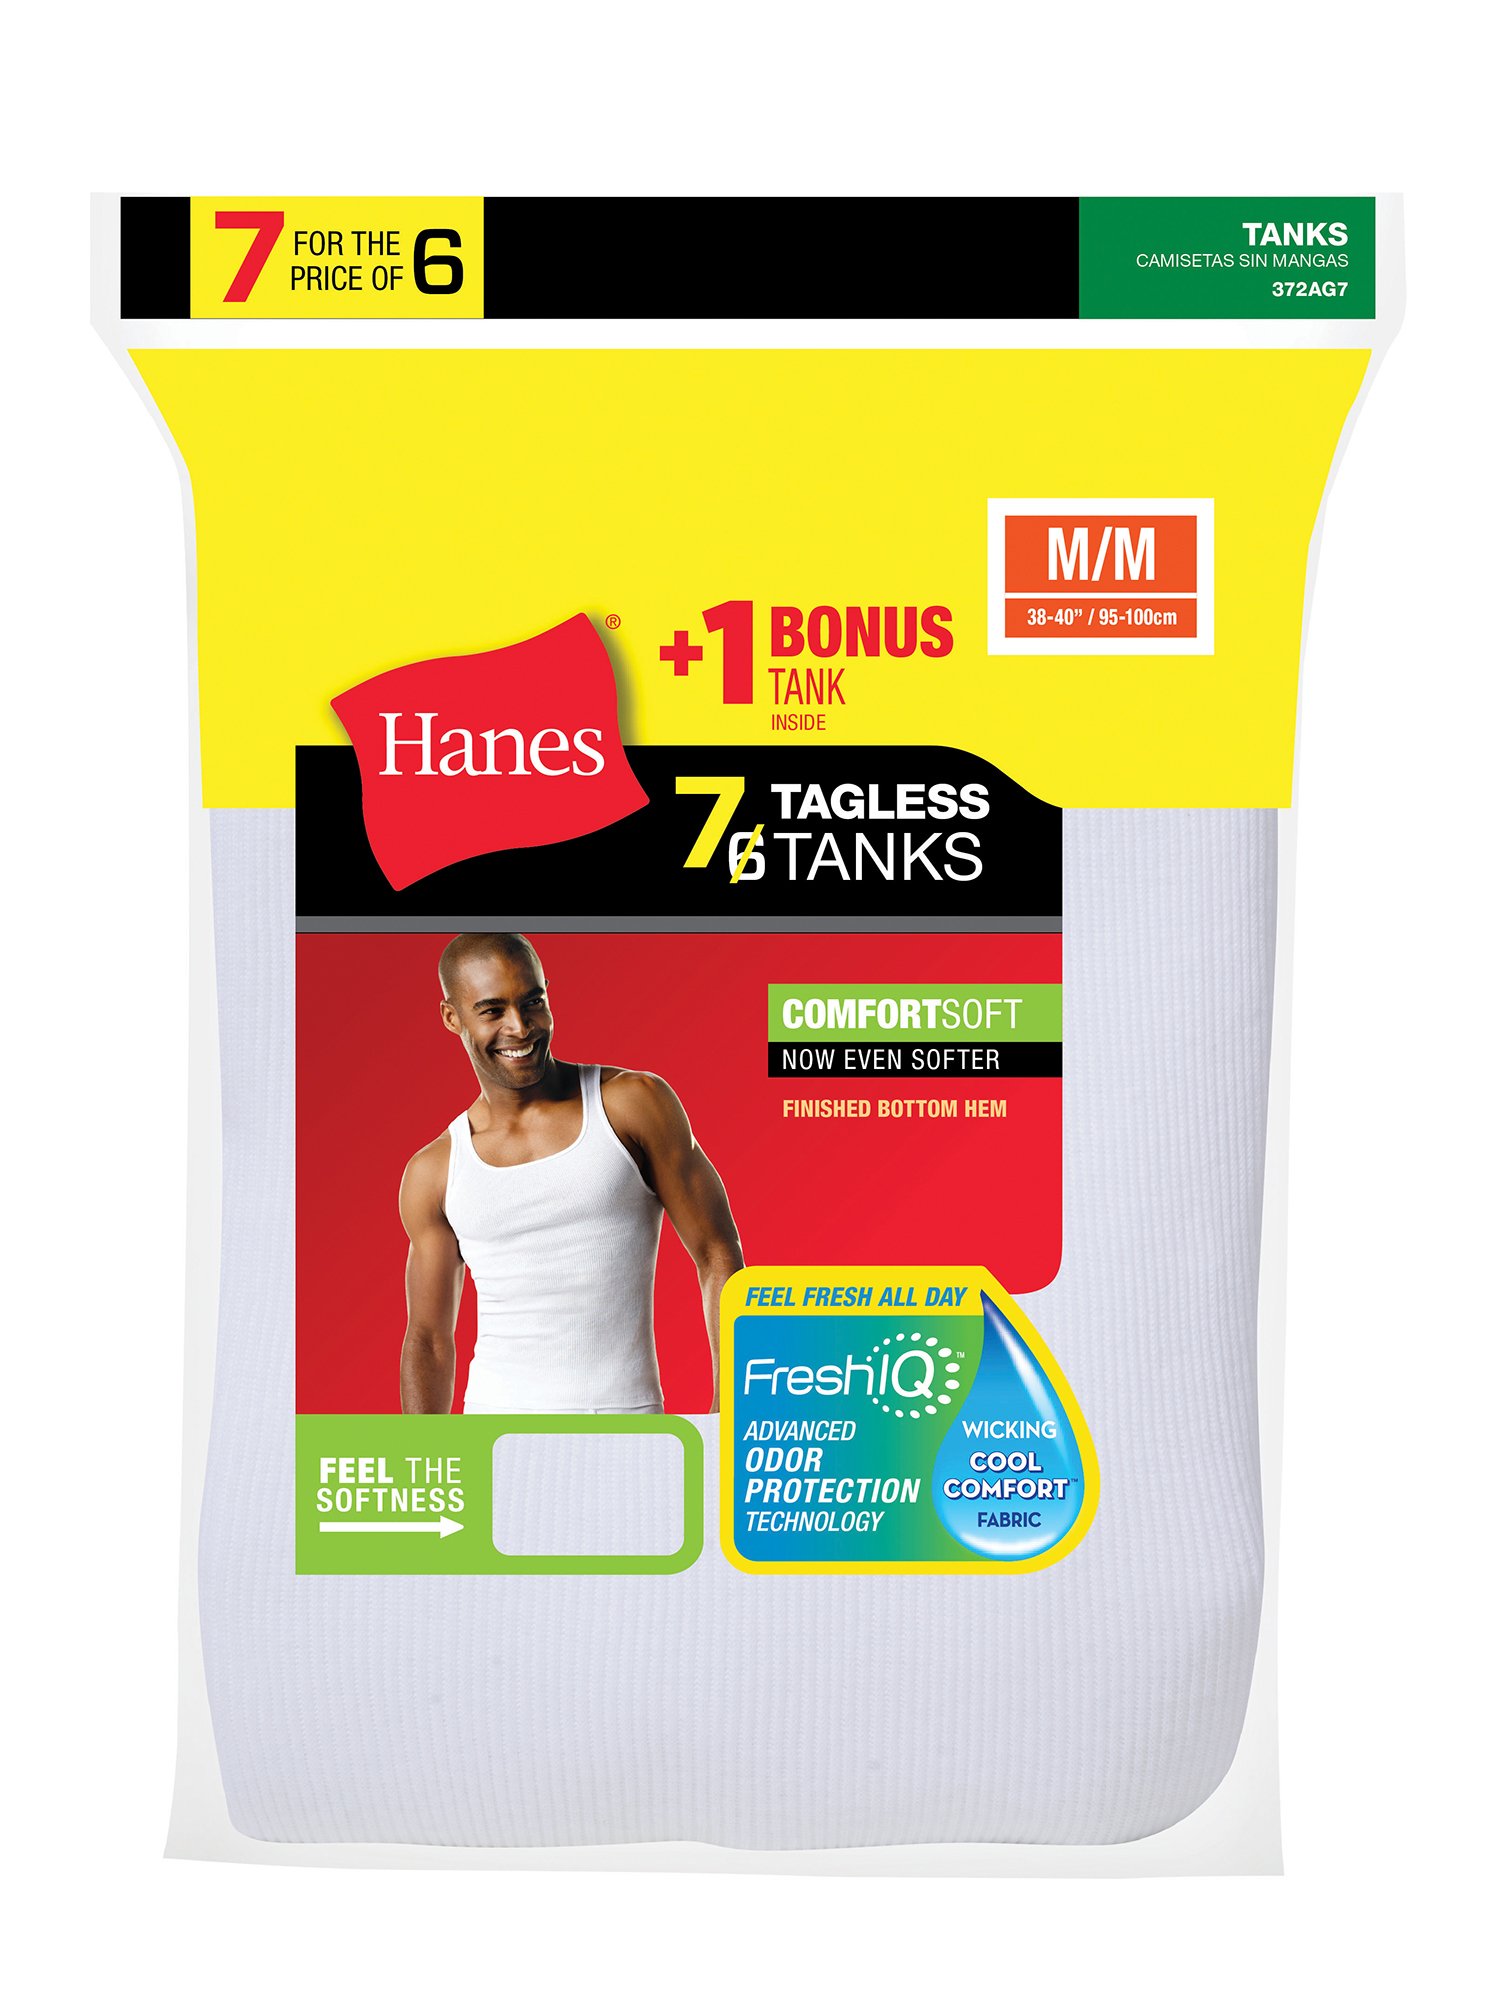 Hanes Mens' White Tank T-Shirt, 6+1 Bonus Pack - image 2 of 2